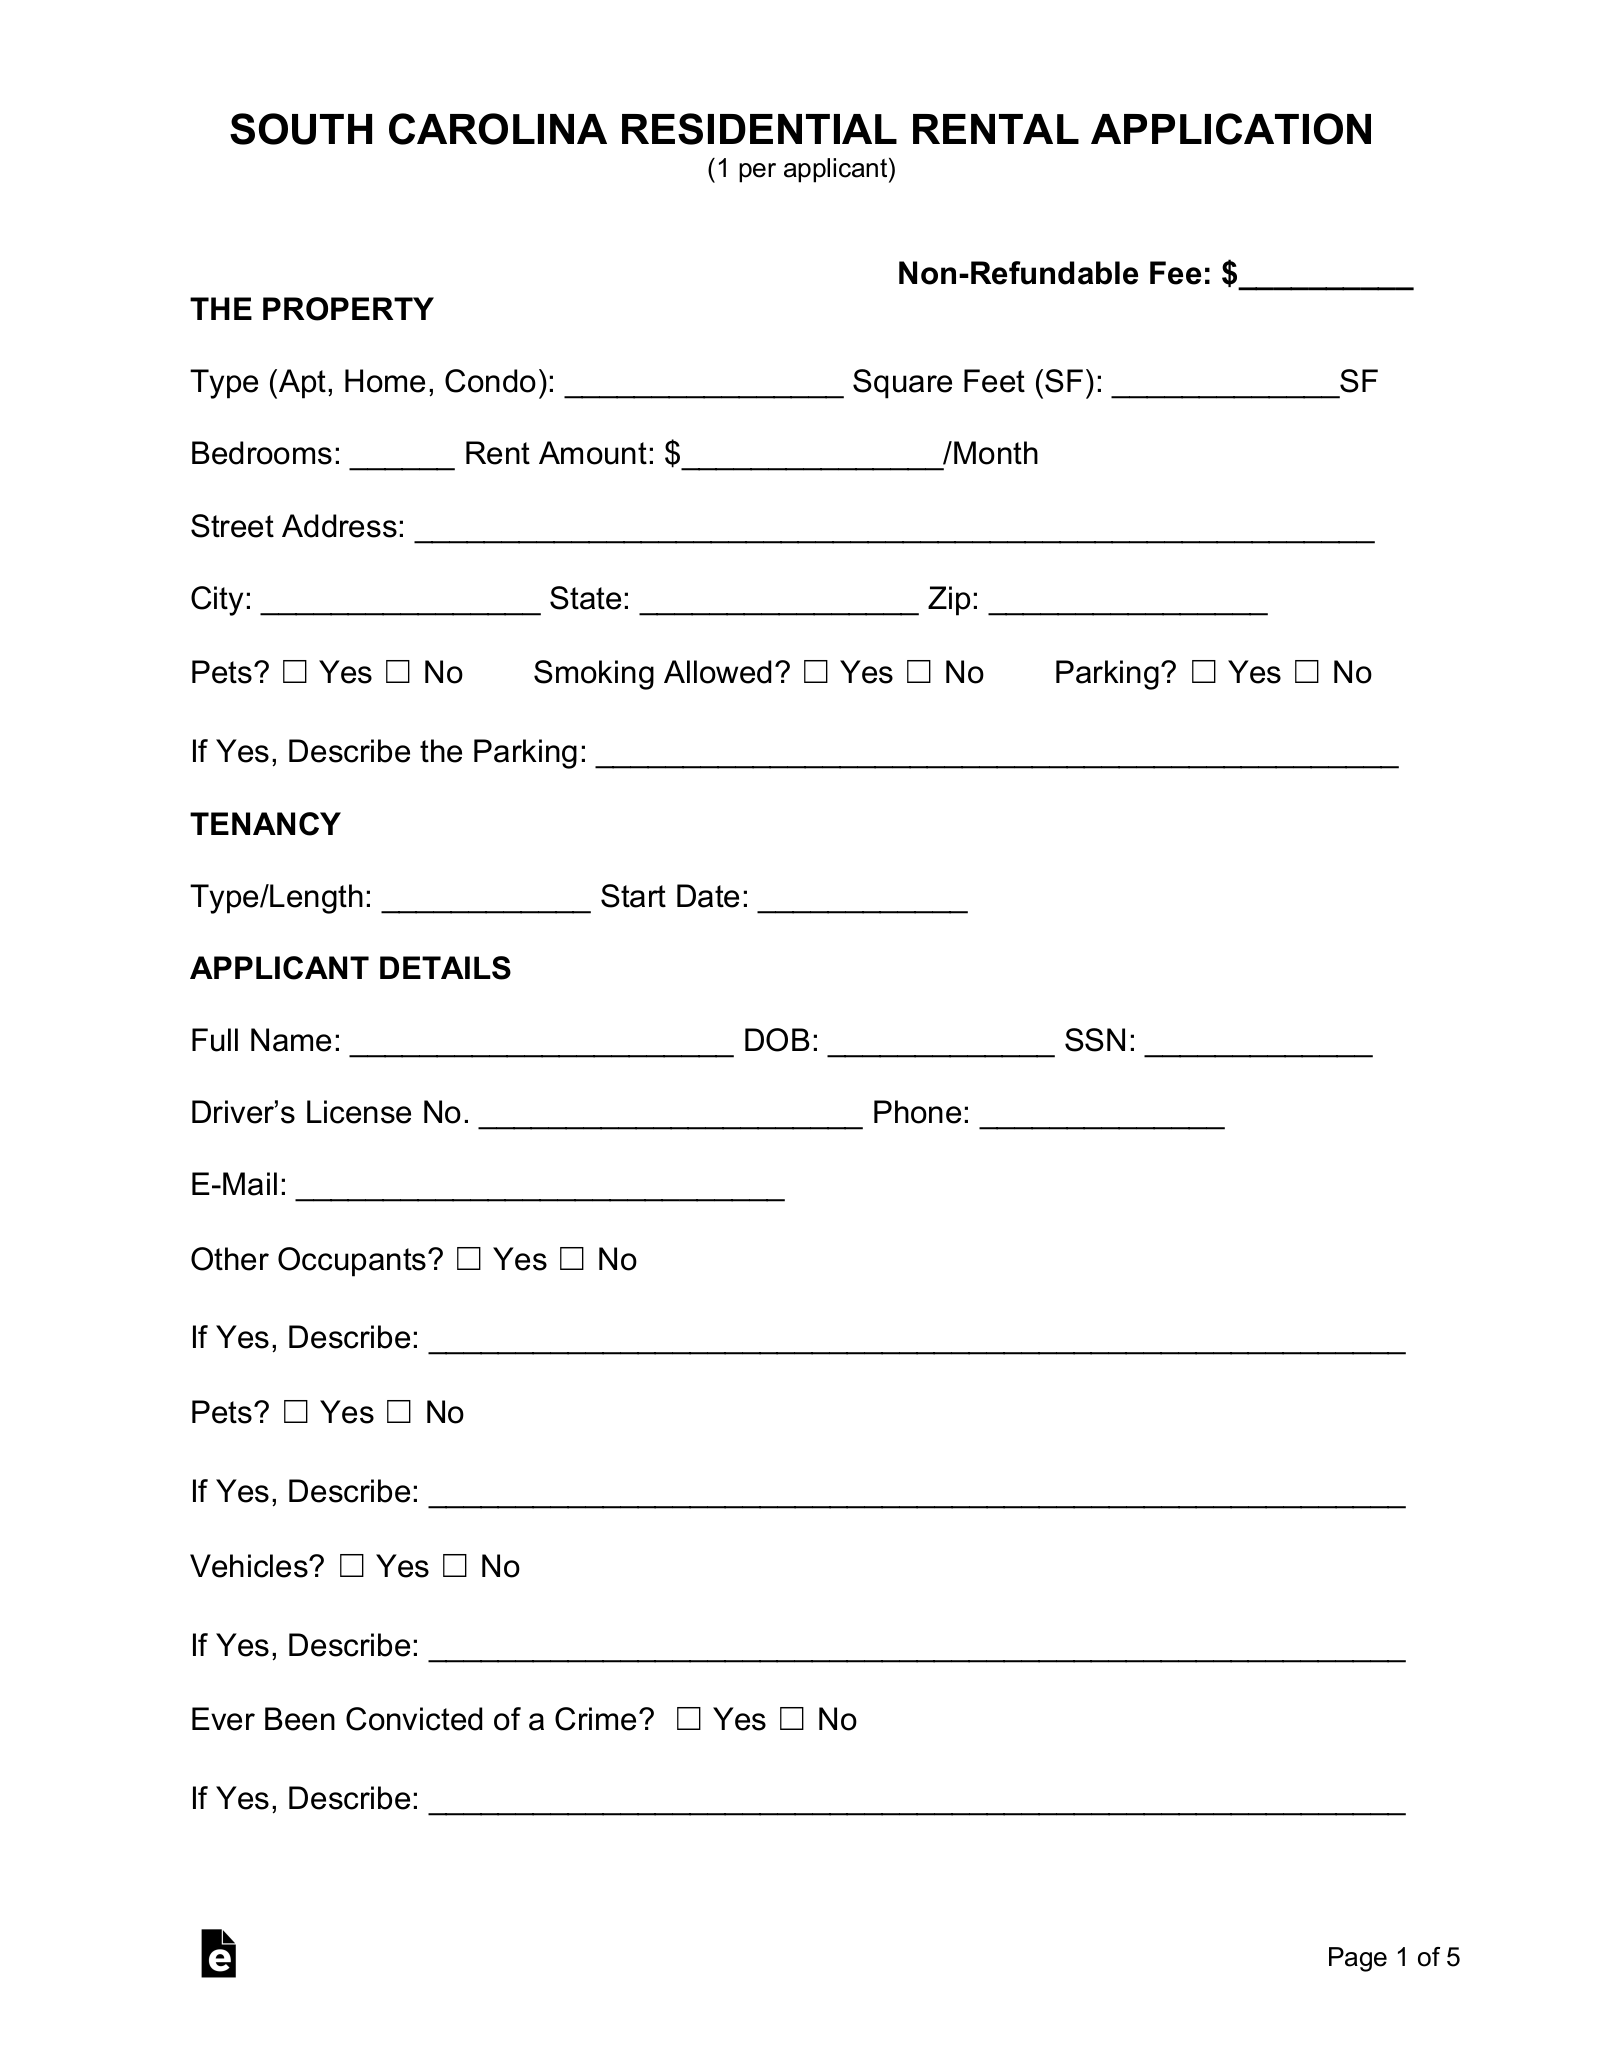 South Carolina Rental Application Form